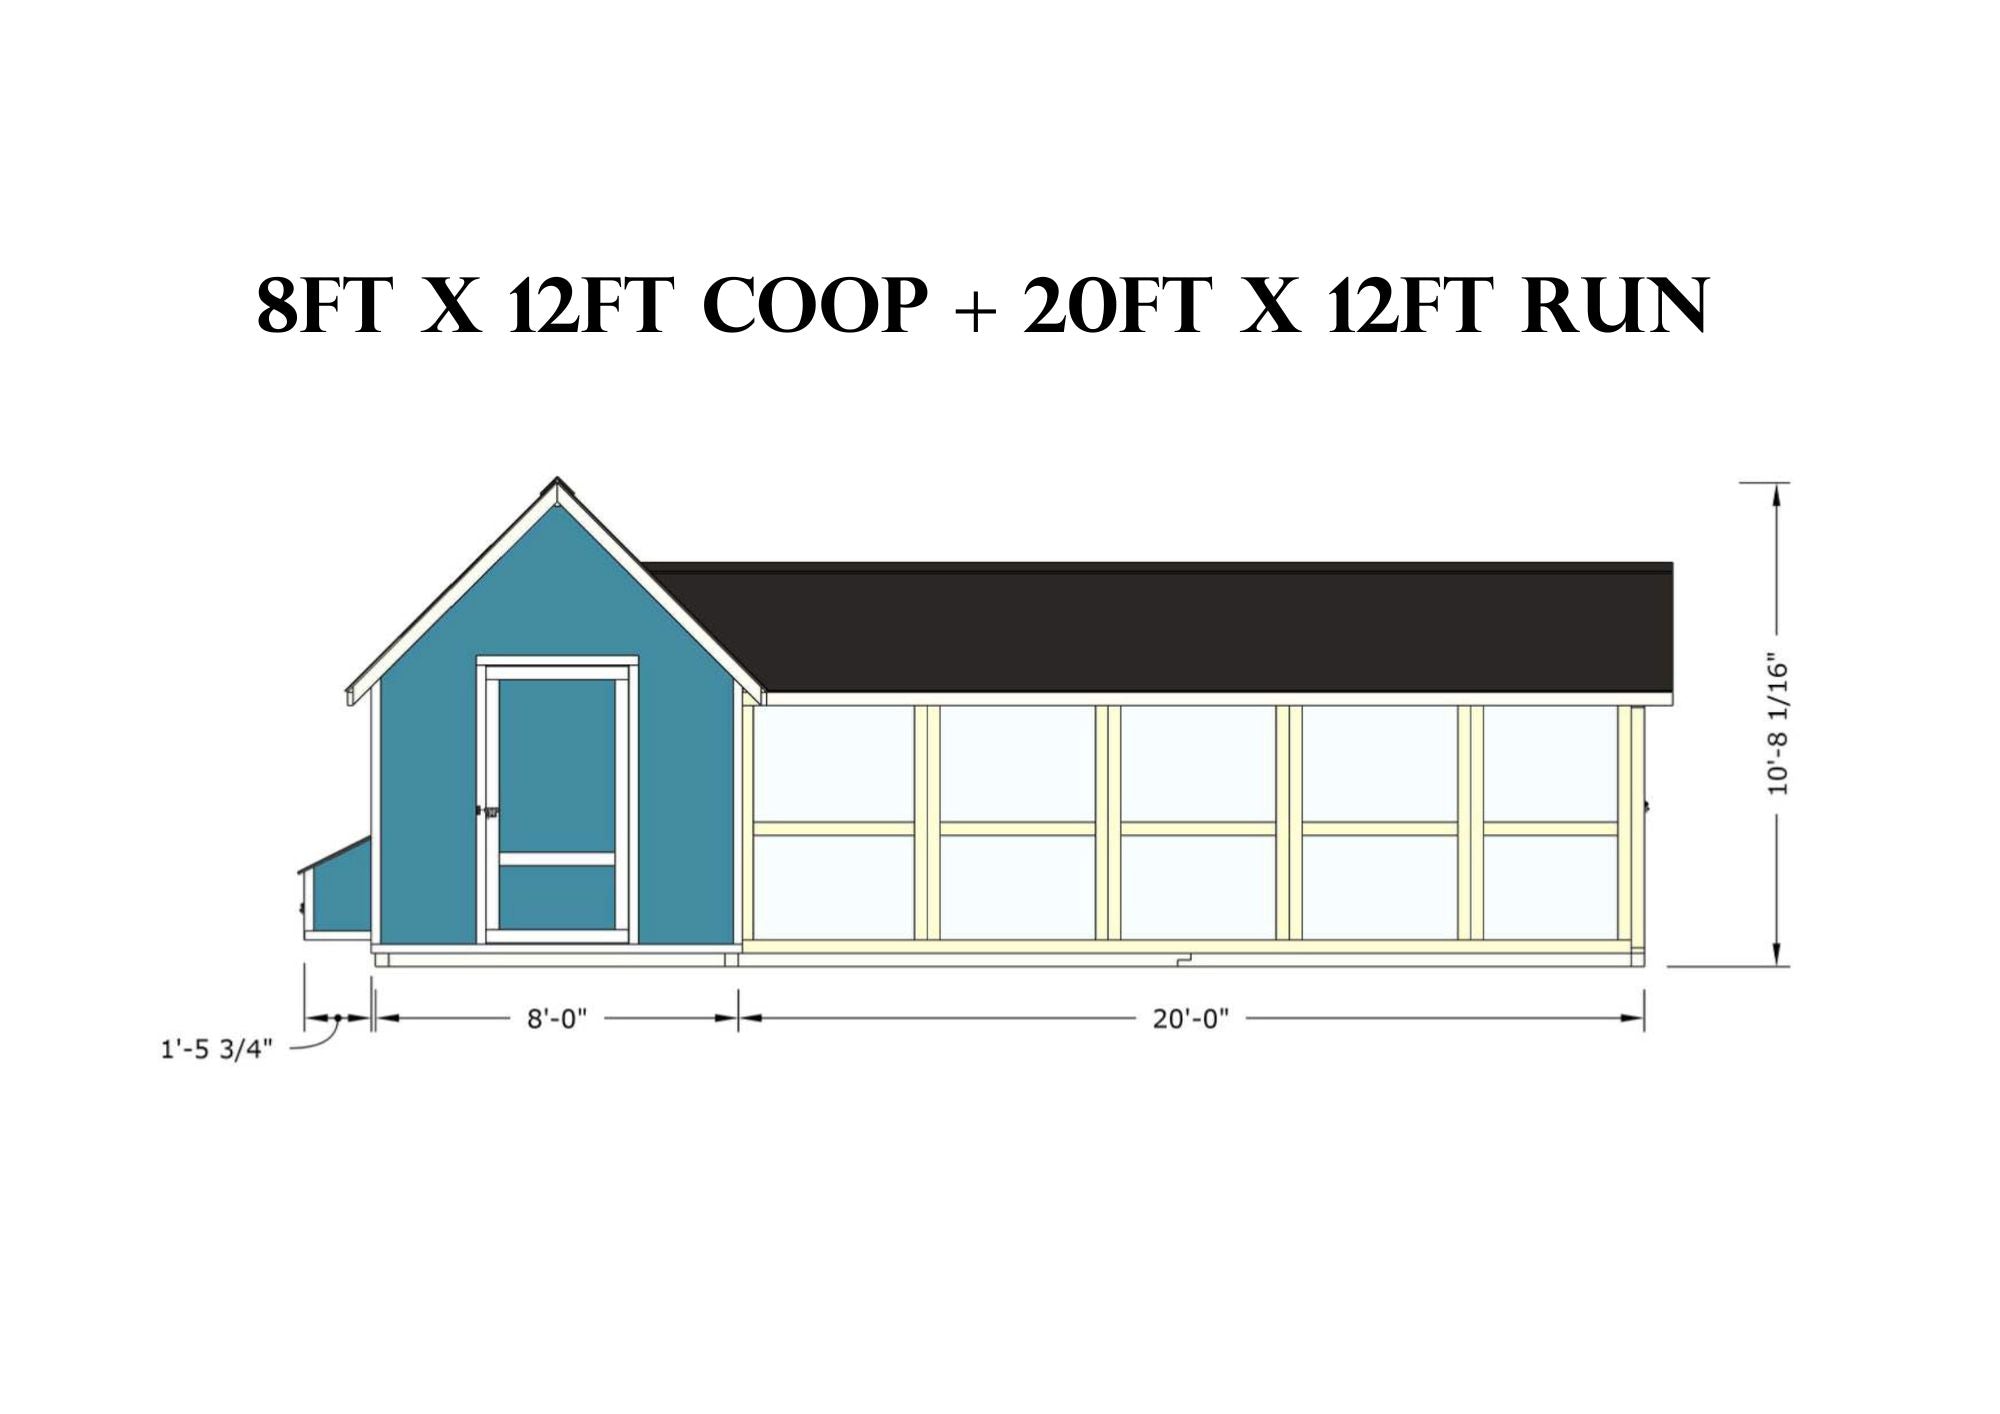 XL Bee Jeweled Coop | Chicken Coop Building Plans | 12-25 Chickens